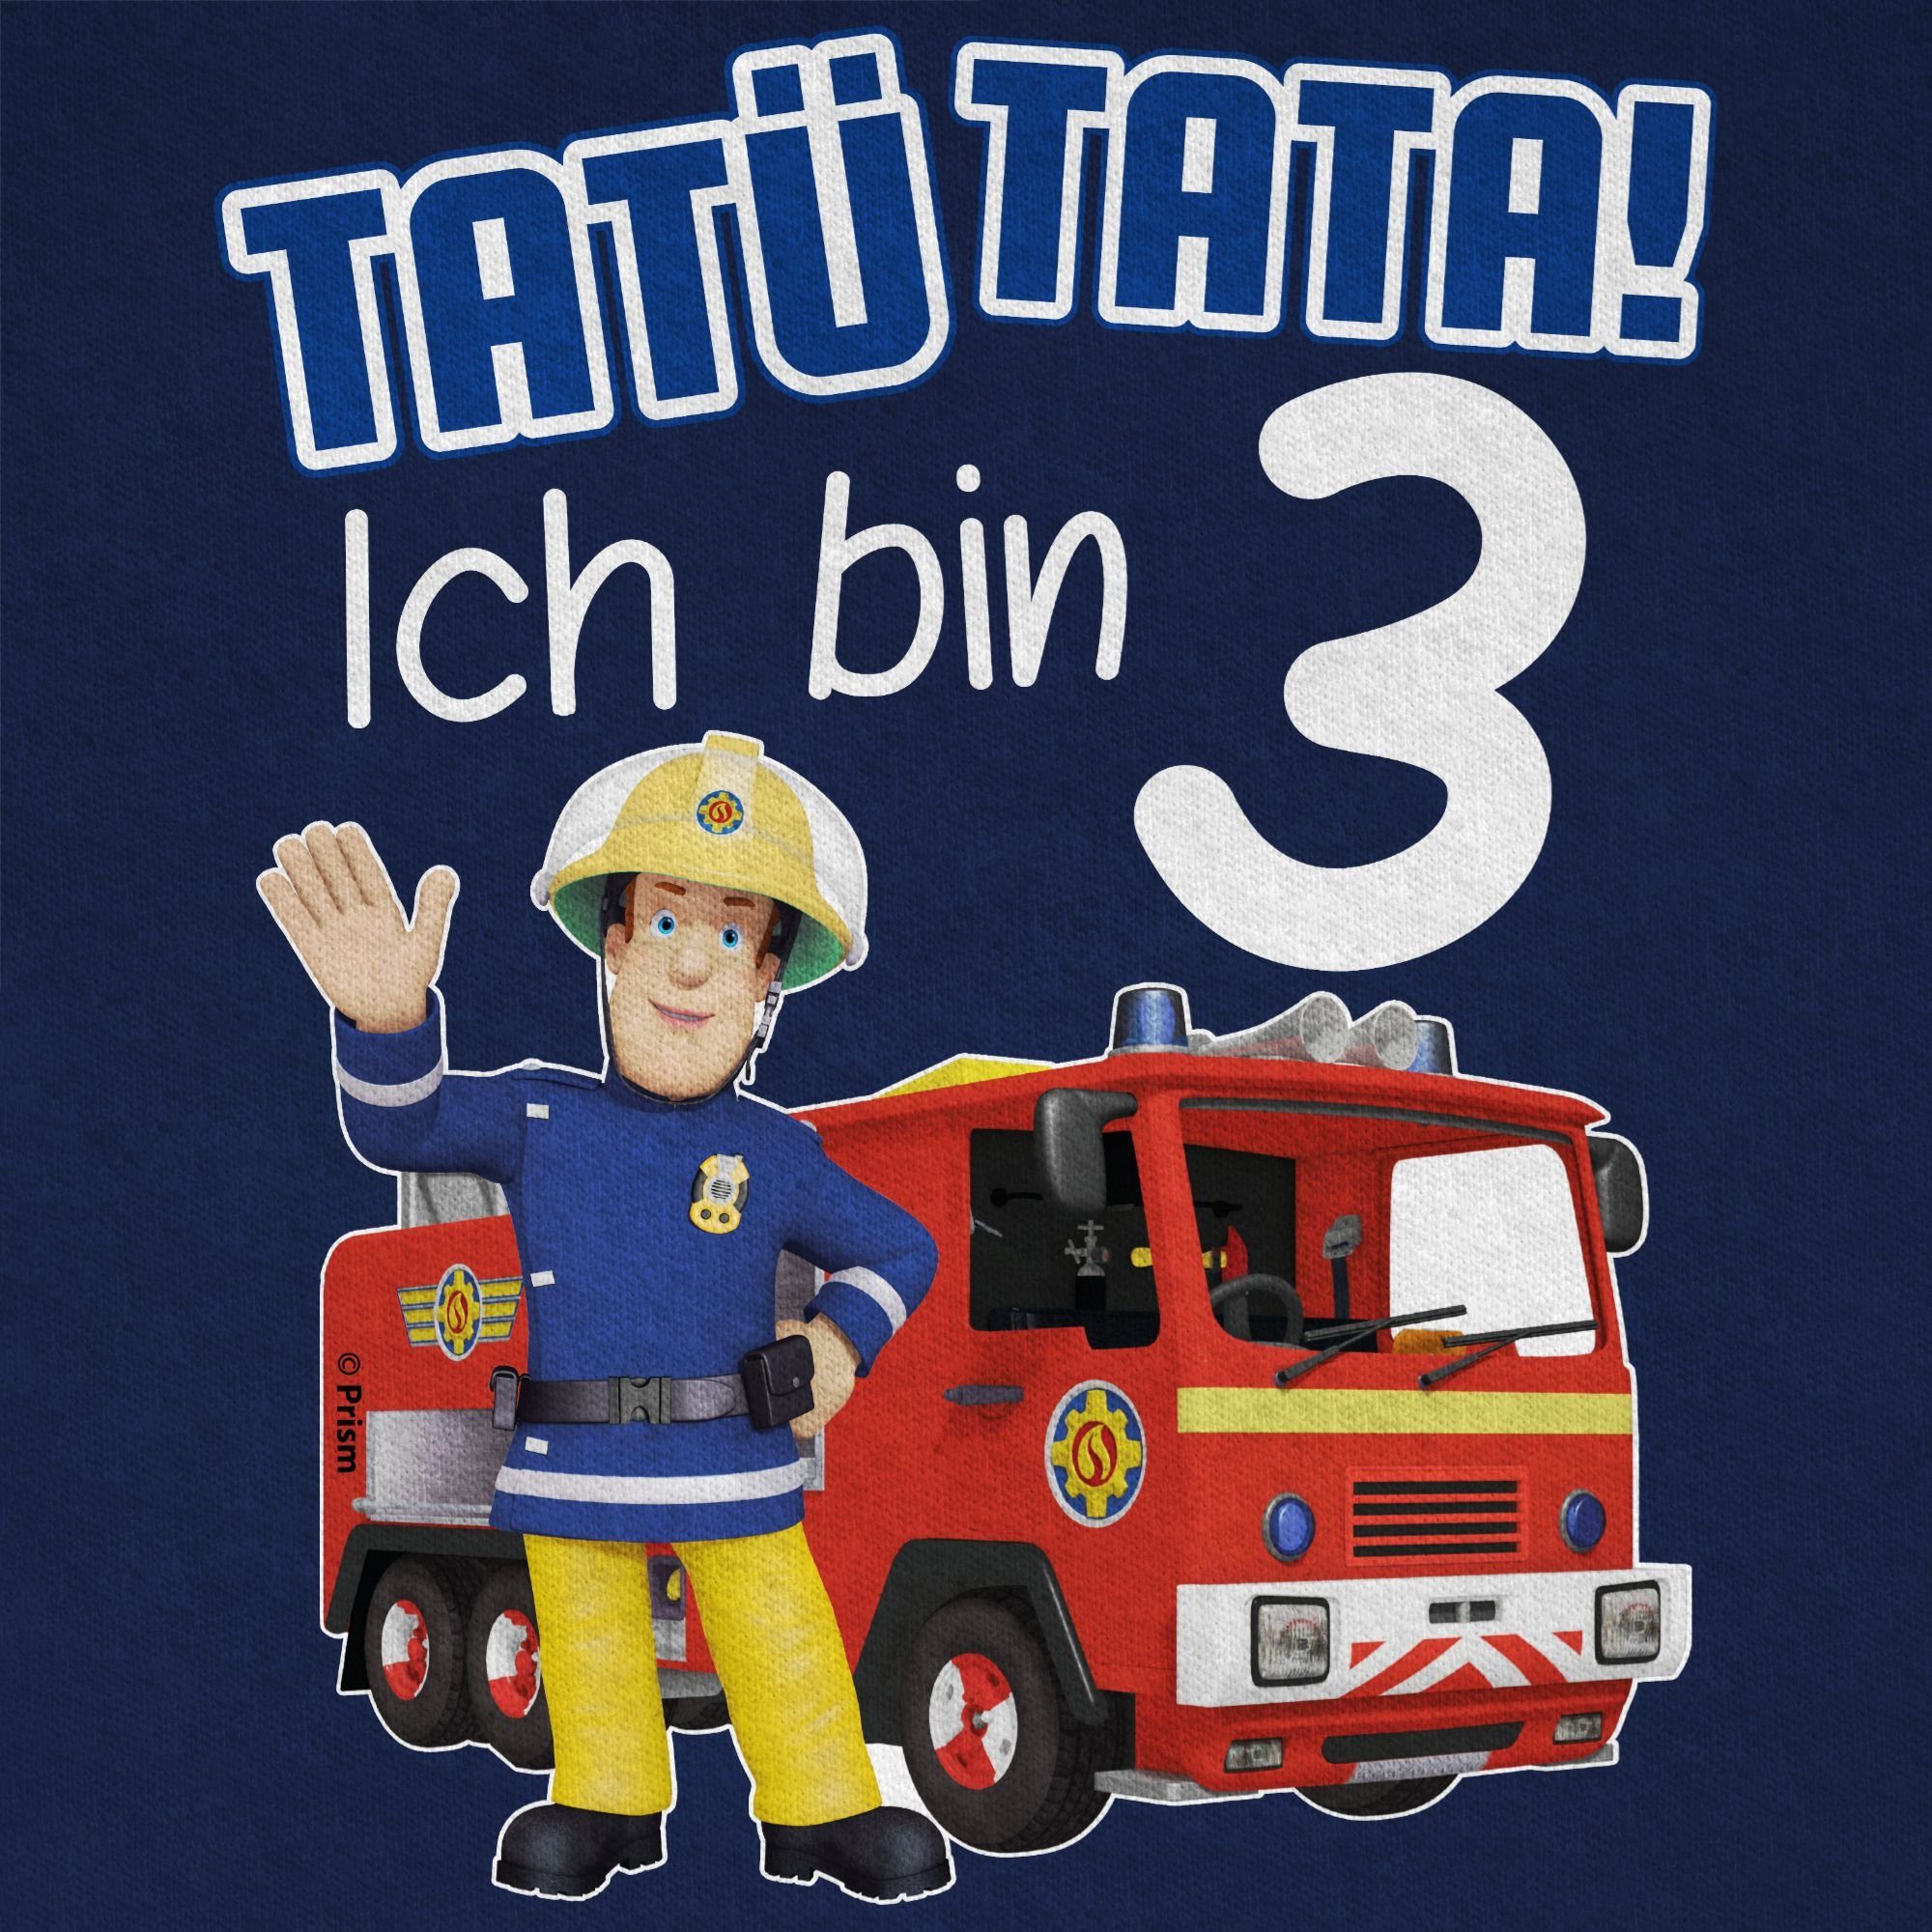 Shirtracer T-Shirt Tatü Tata! Ich Dunkelblau Sam bin Jungen 02 3 Feuerwehrmann